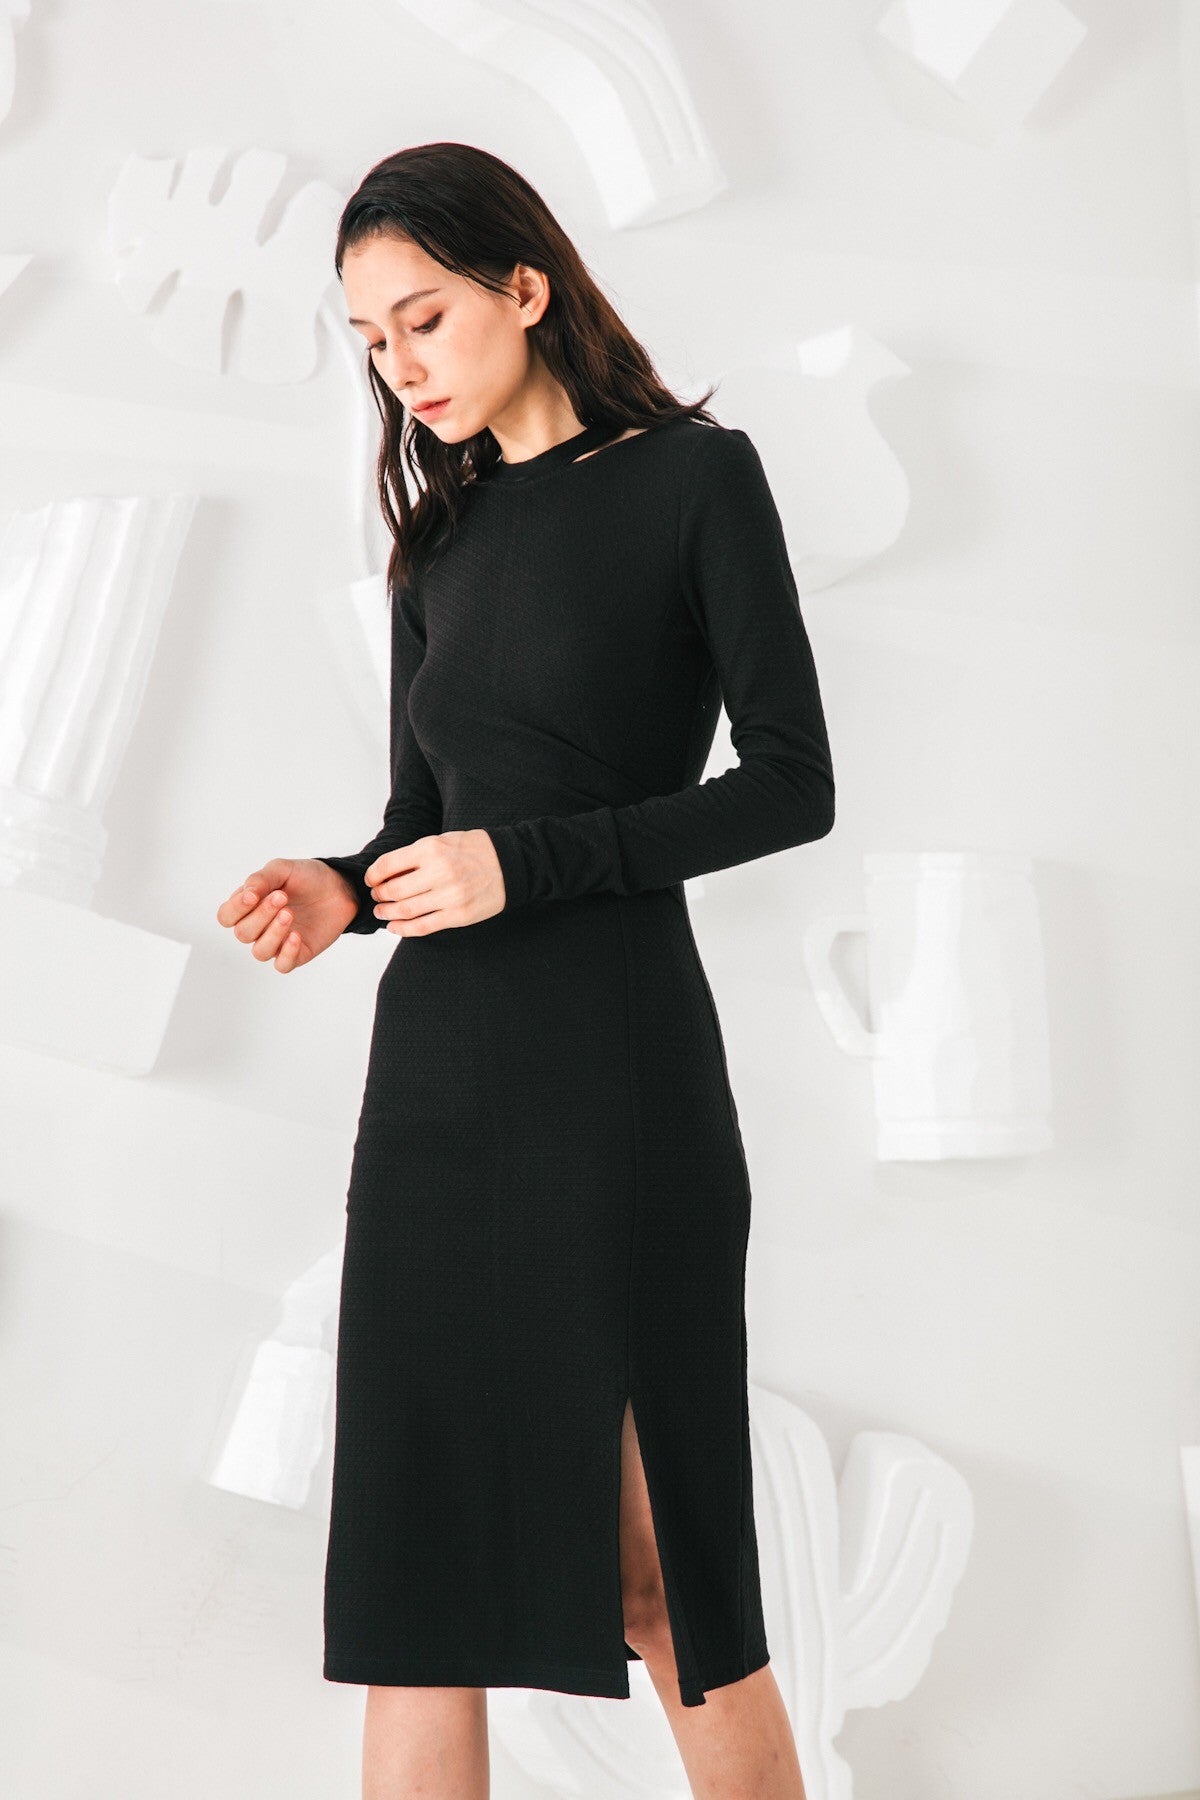 SKYE San Francisco SF shop ethical modern minimalist quality women clothing fashion Mélanie Dress black 3